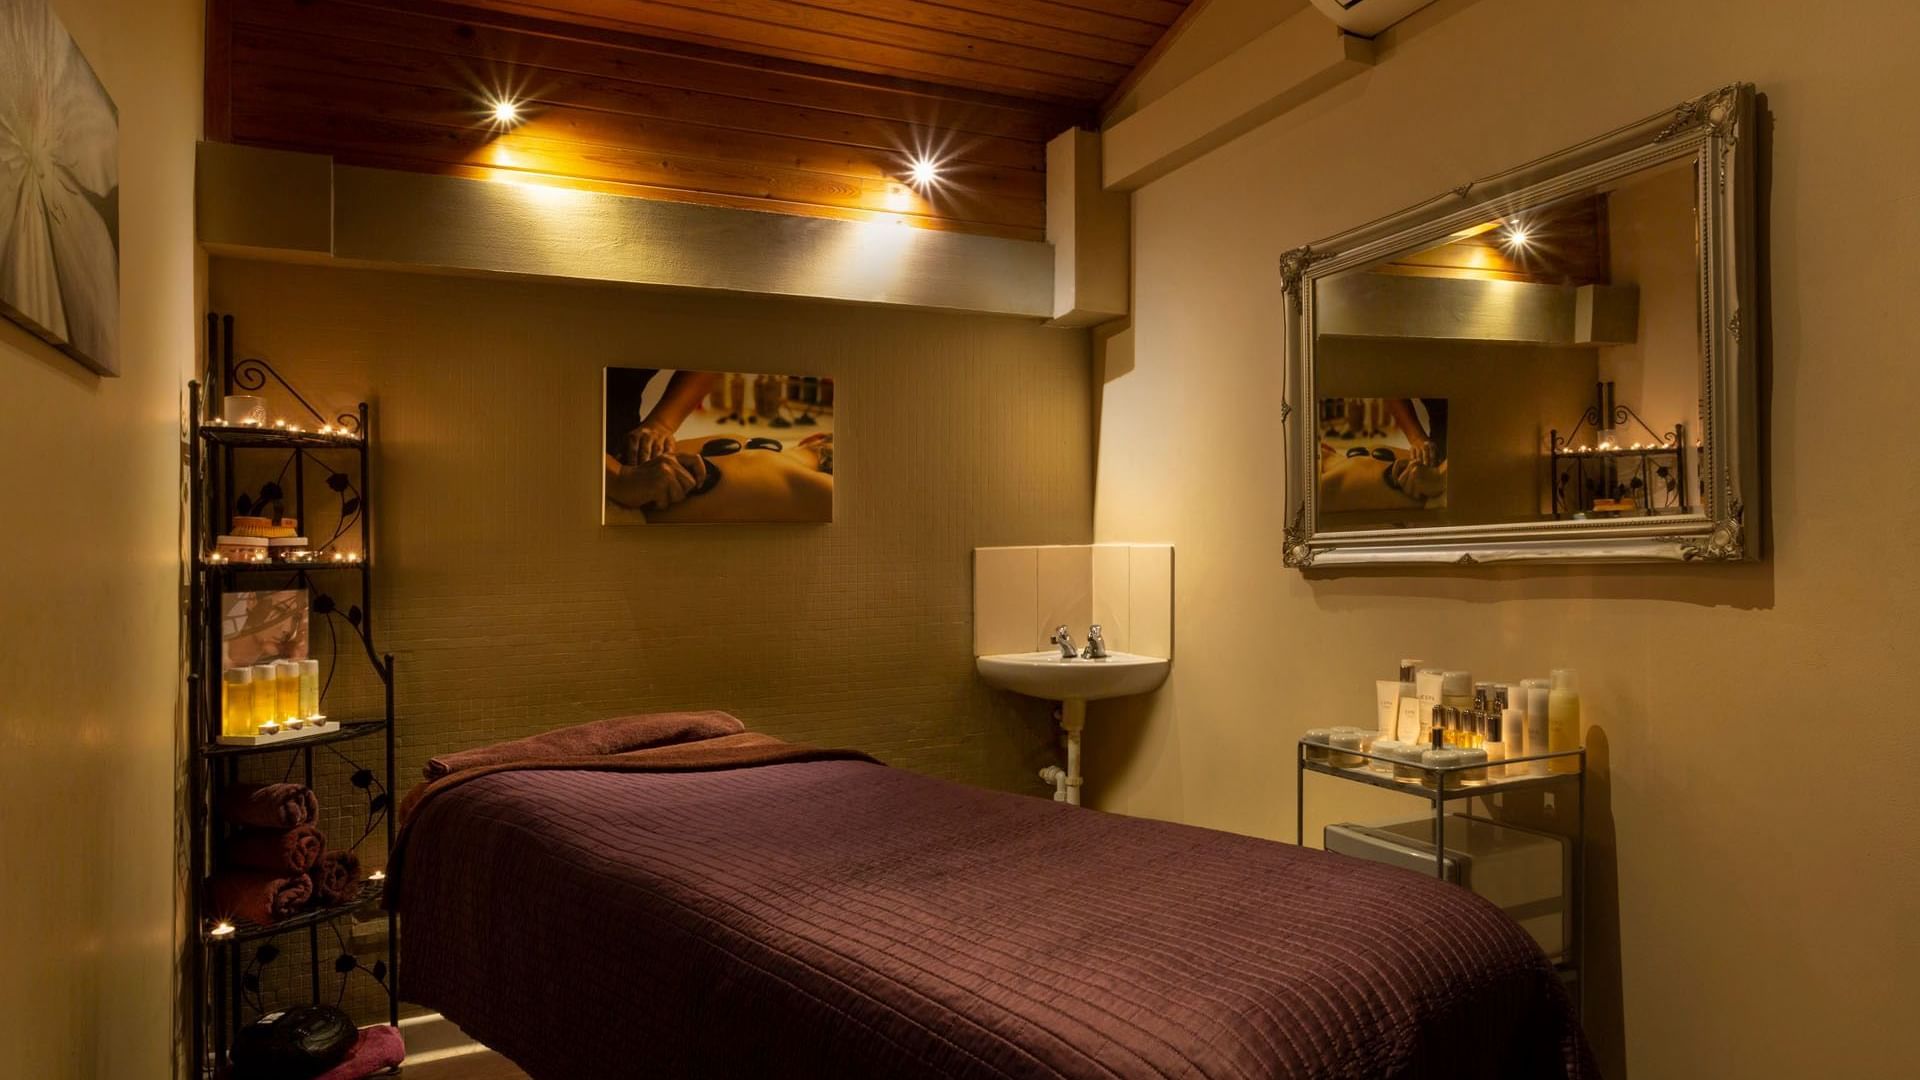 daniel craige share hot oil massage room photos